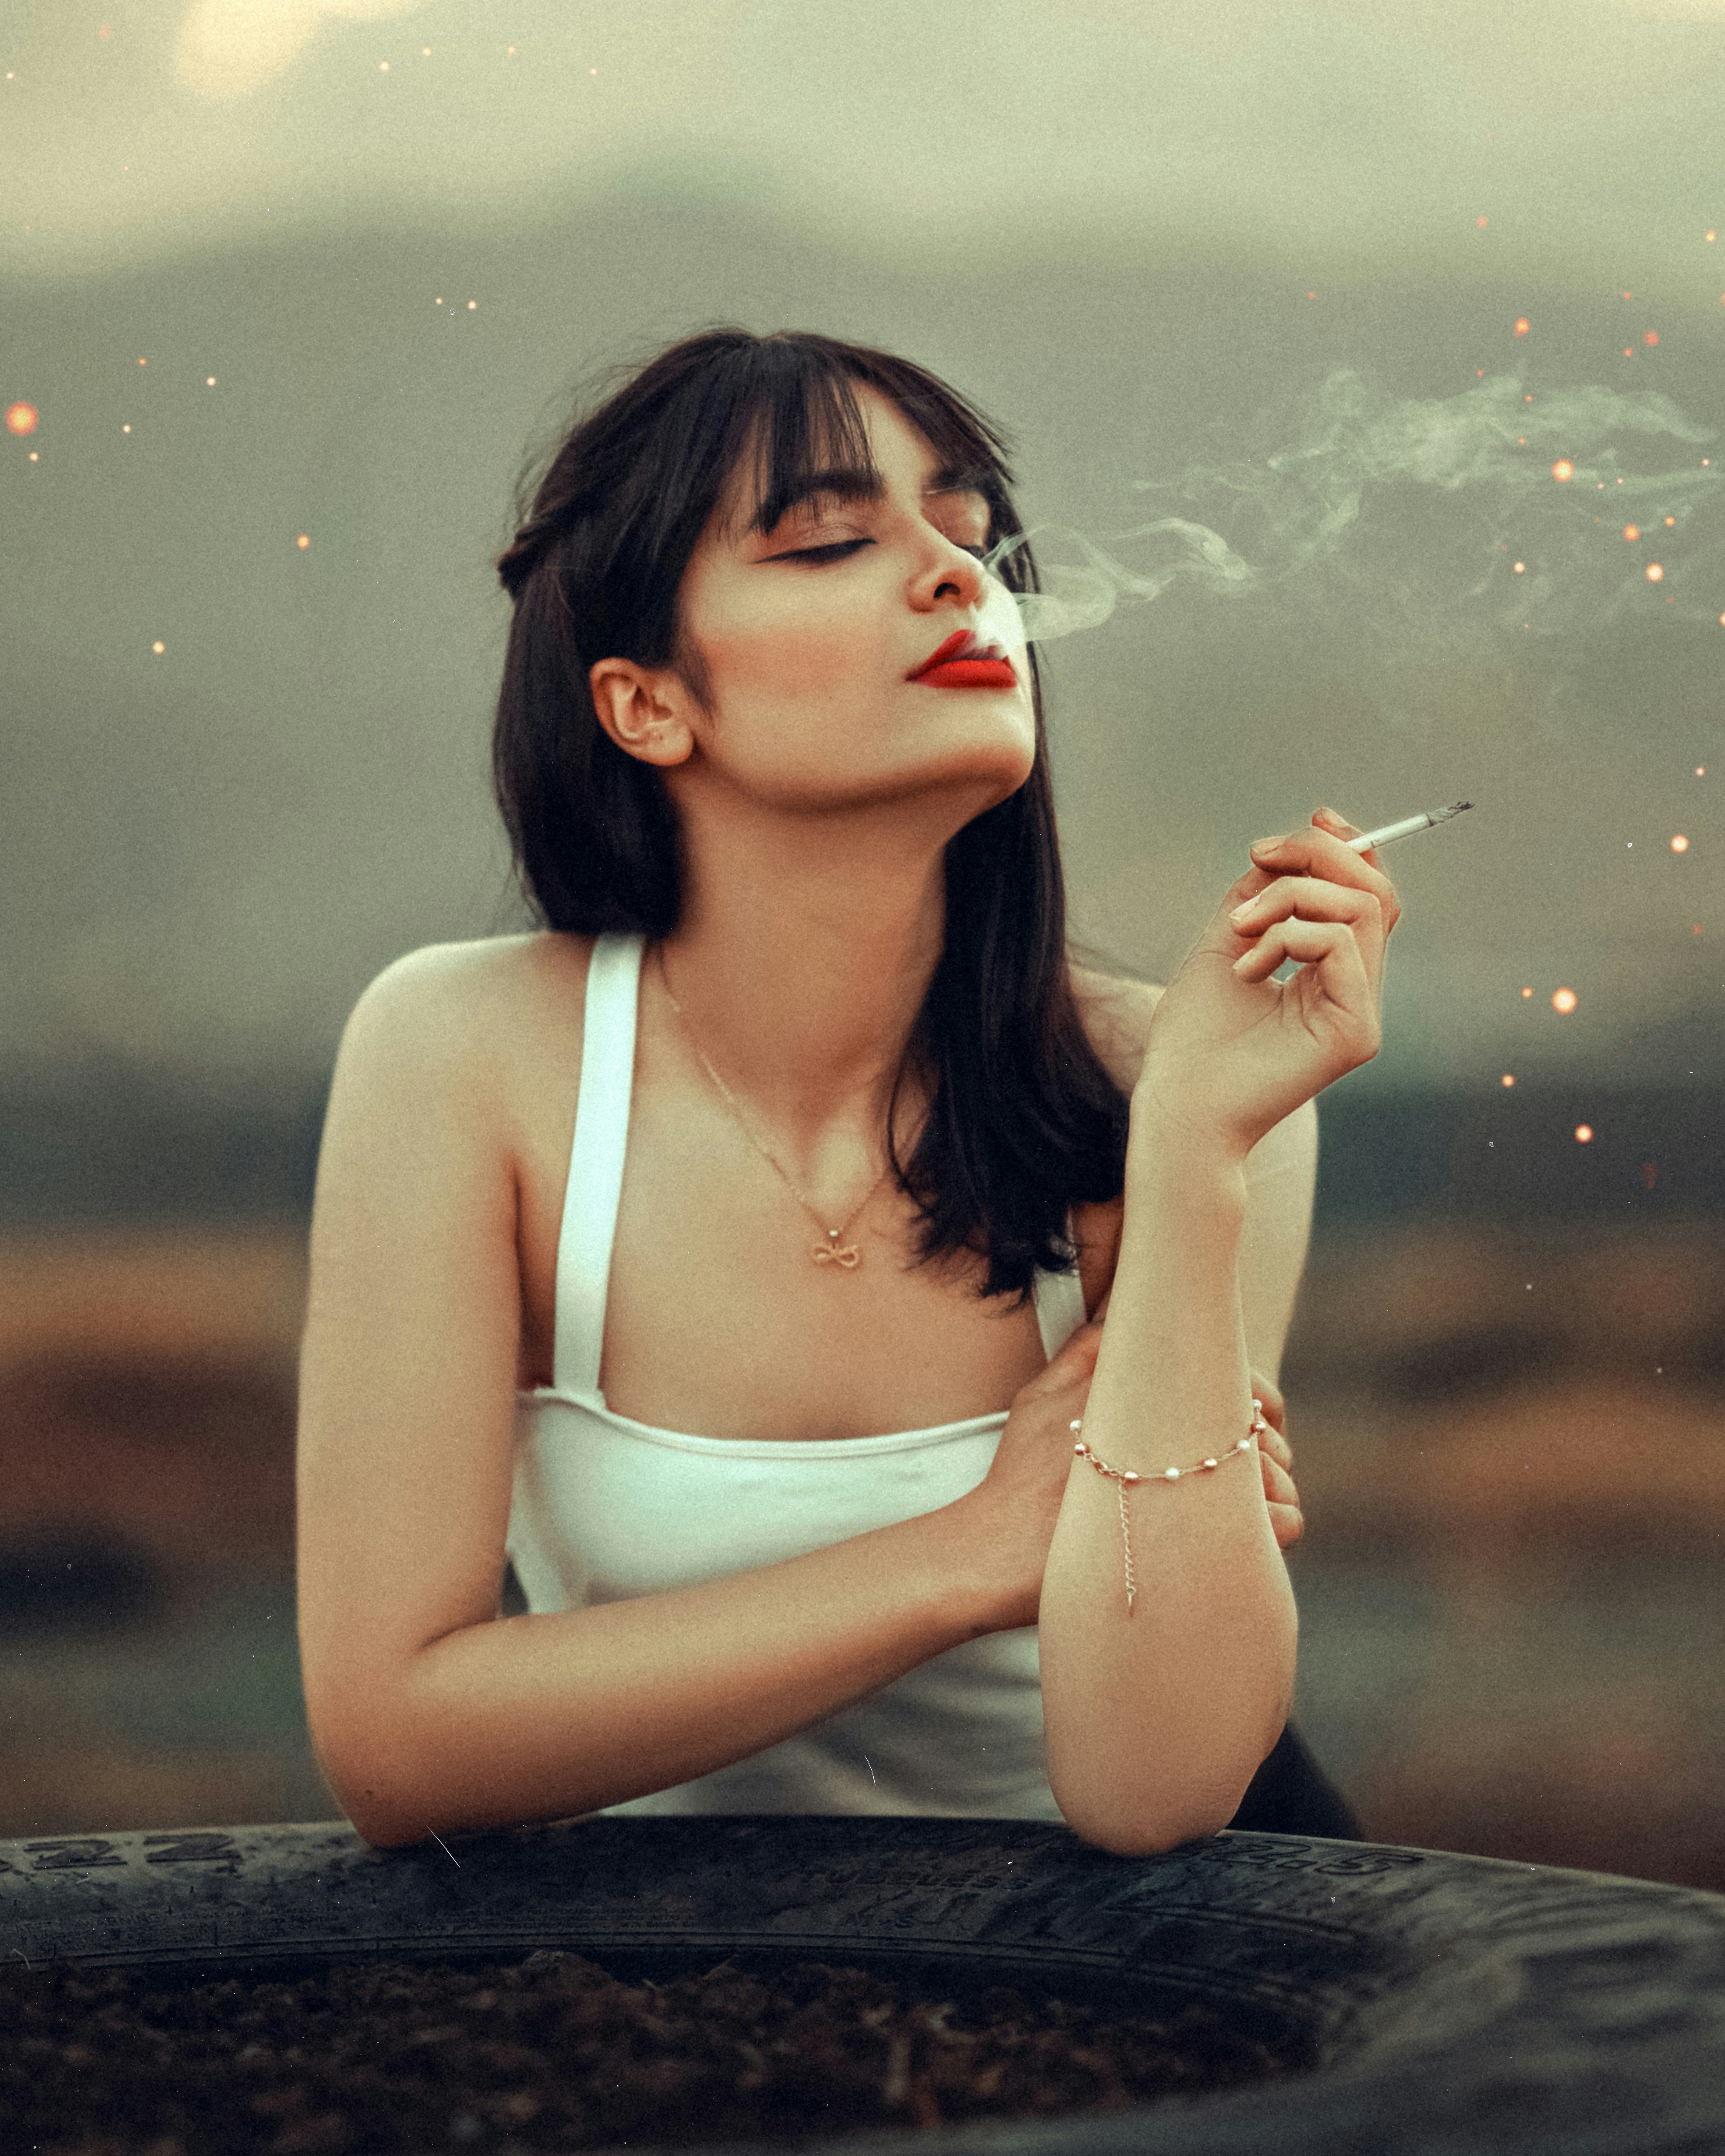 craig millson recommends Pretty Girls Smoking Cigarettes